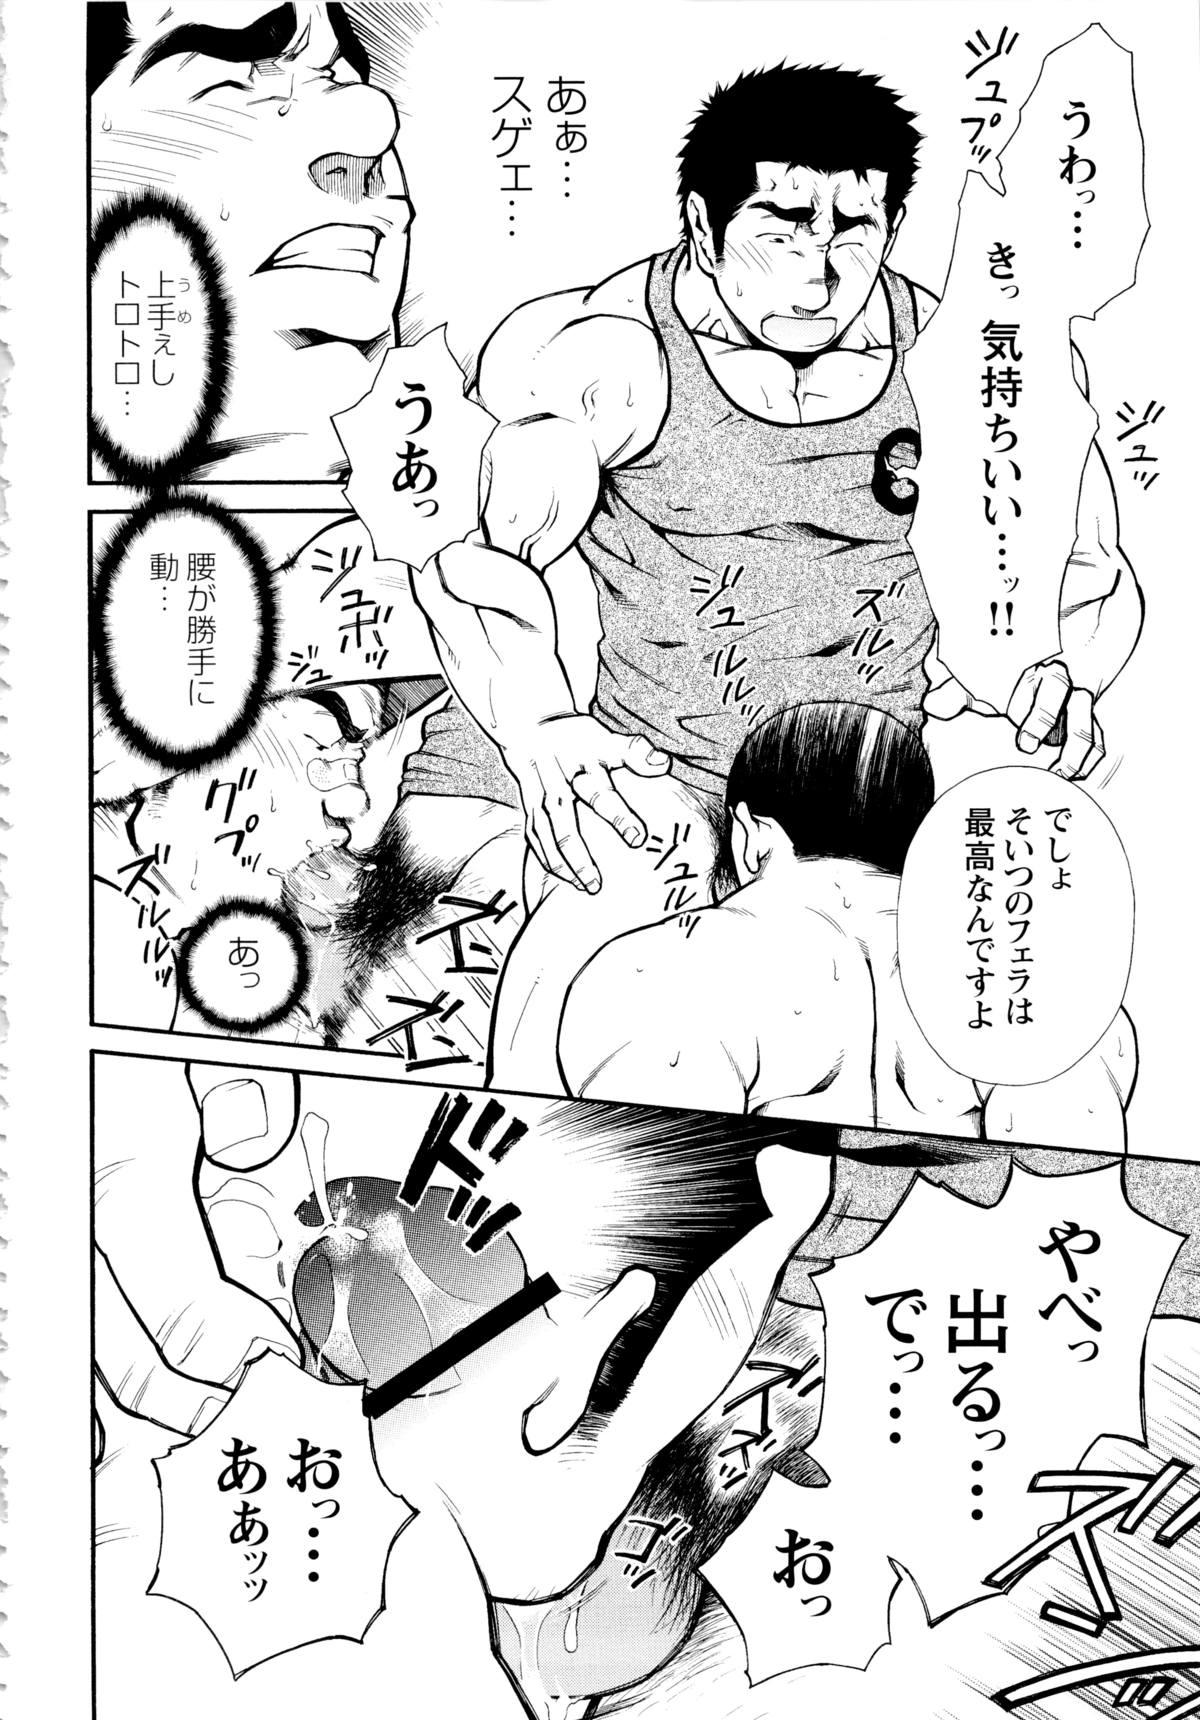 Reverse Osu Hachi no Mitsu - by -晃次郎 (Terujirou) Home - Page 12